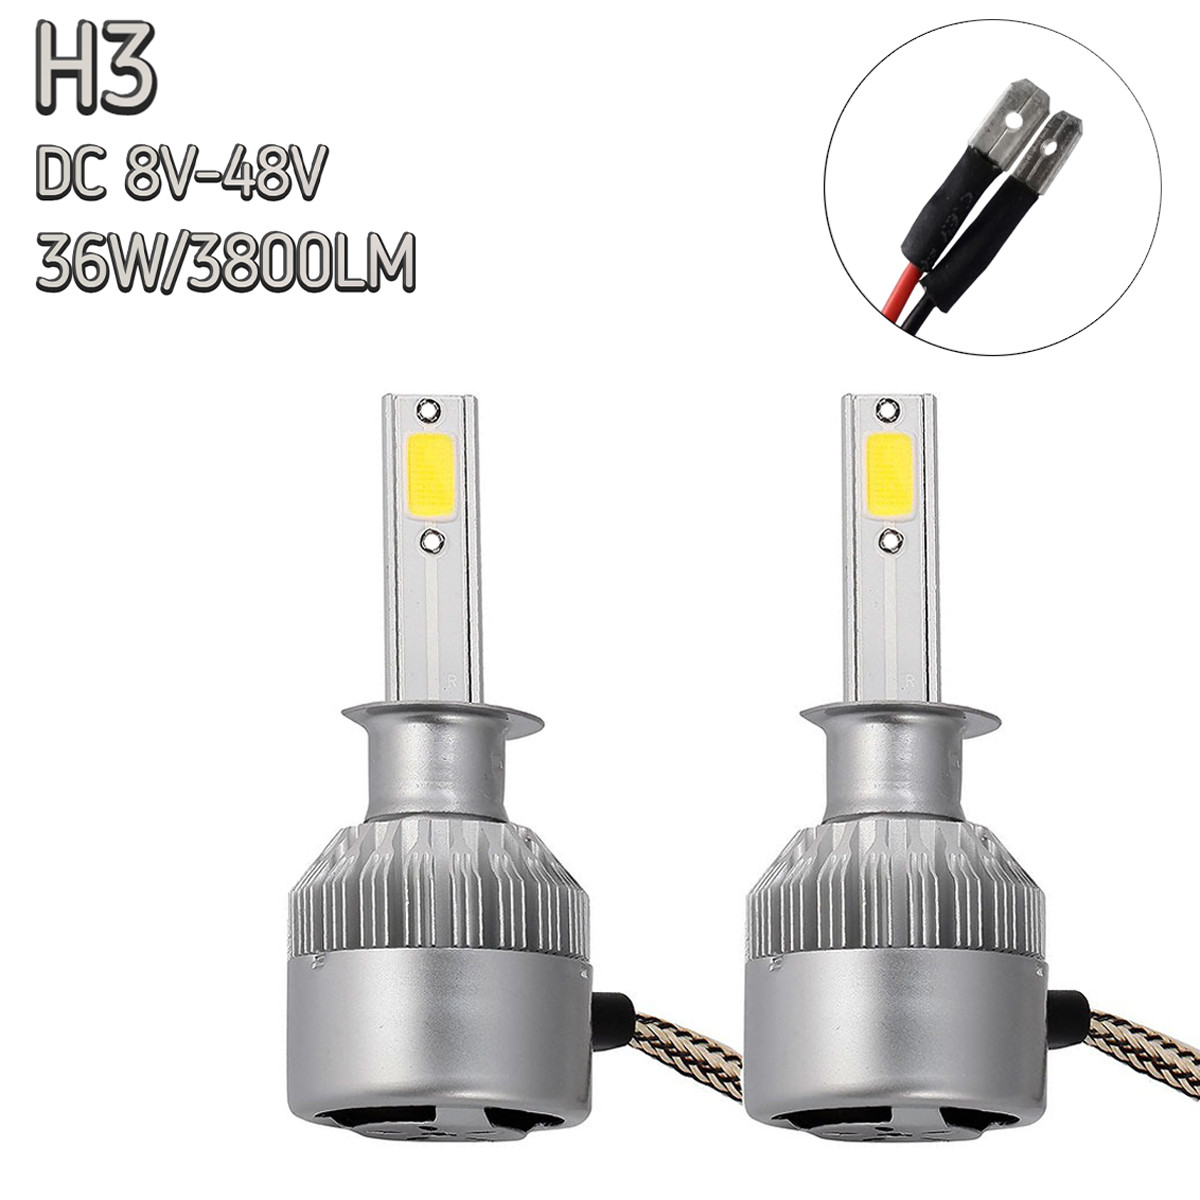 Автомобільні лампи C6 H3 LED Headlight 8V-48V 36W/3800Lm комплект автомобільних лід лампочок Н3